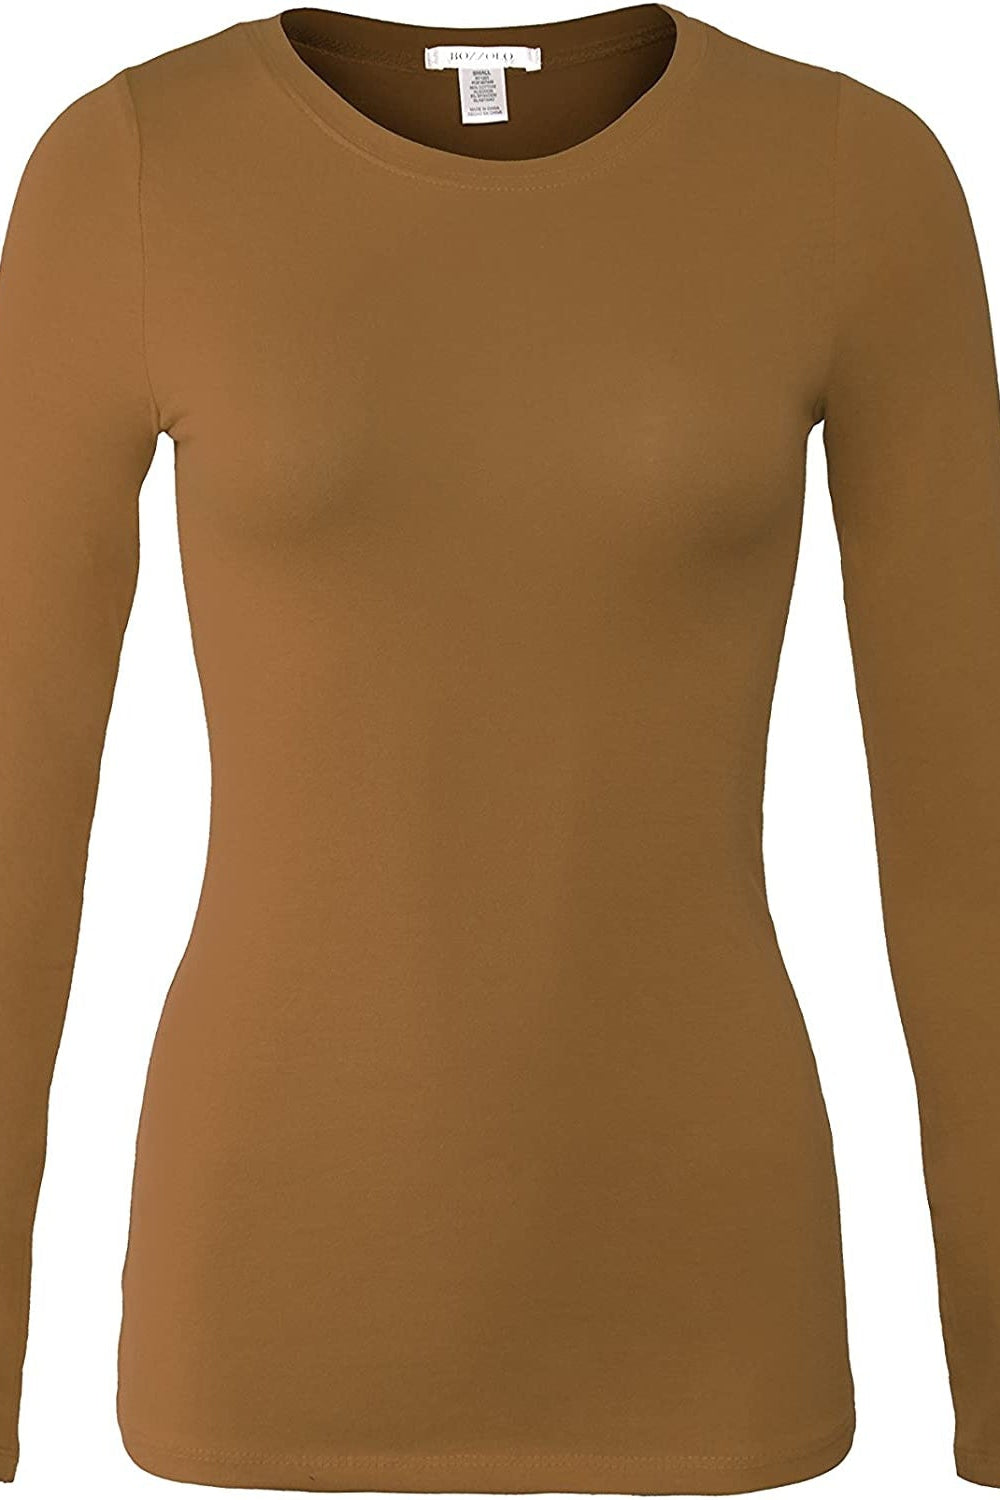 Long-sleeved t-shirt jewelled detail chestnut brown ladies